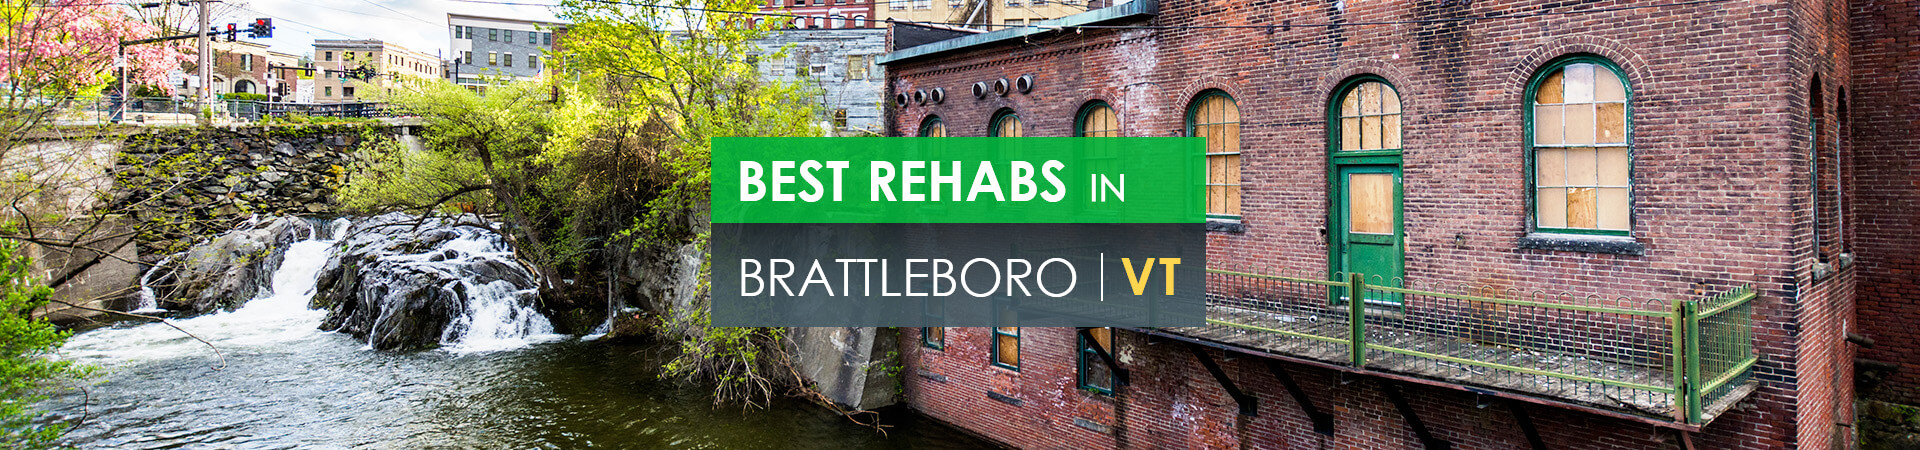 Best rehabs in Brattleboro, VT